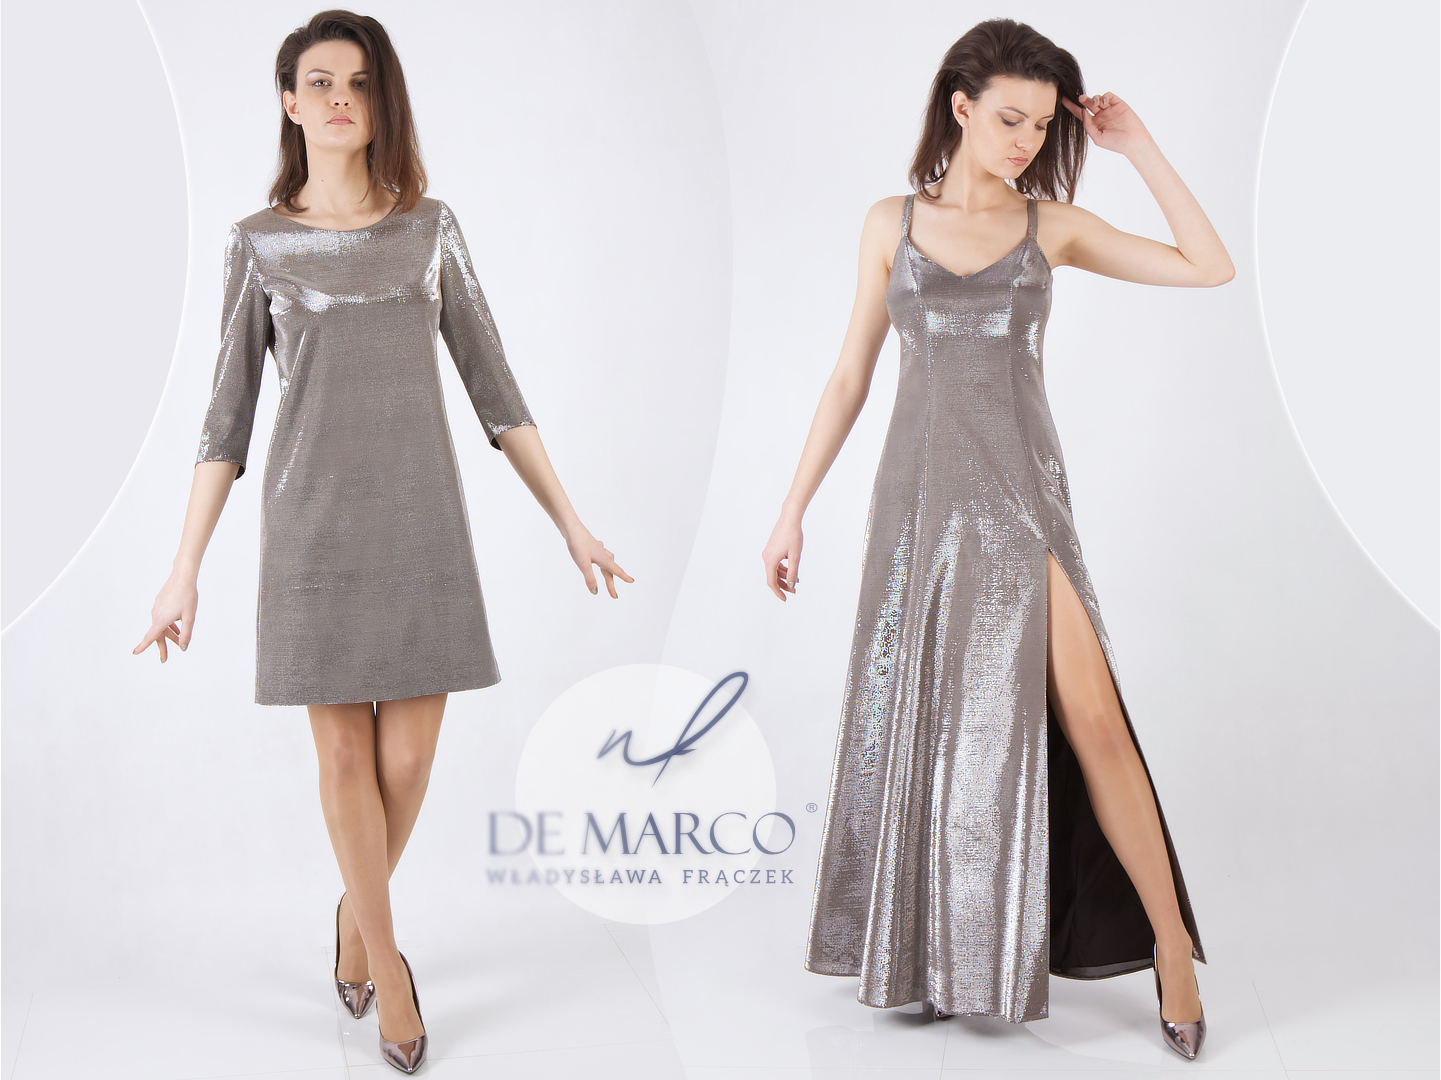 Sensual Elegance: De Marco’s luxurious evening gowns with metallic silver sheen